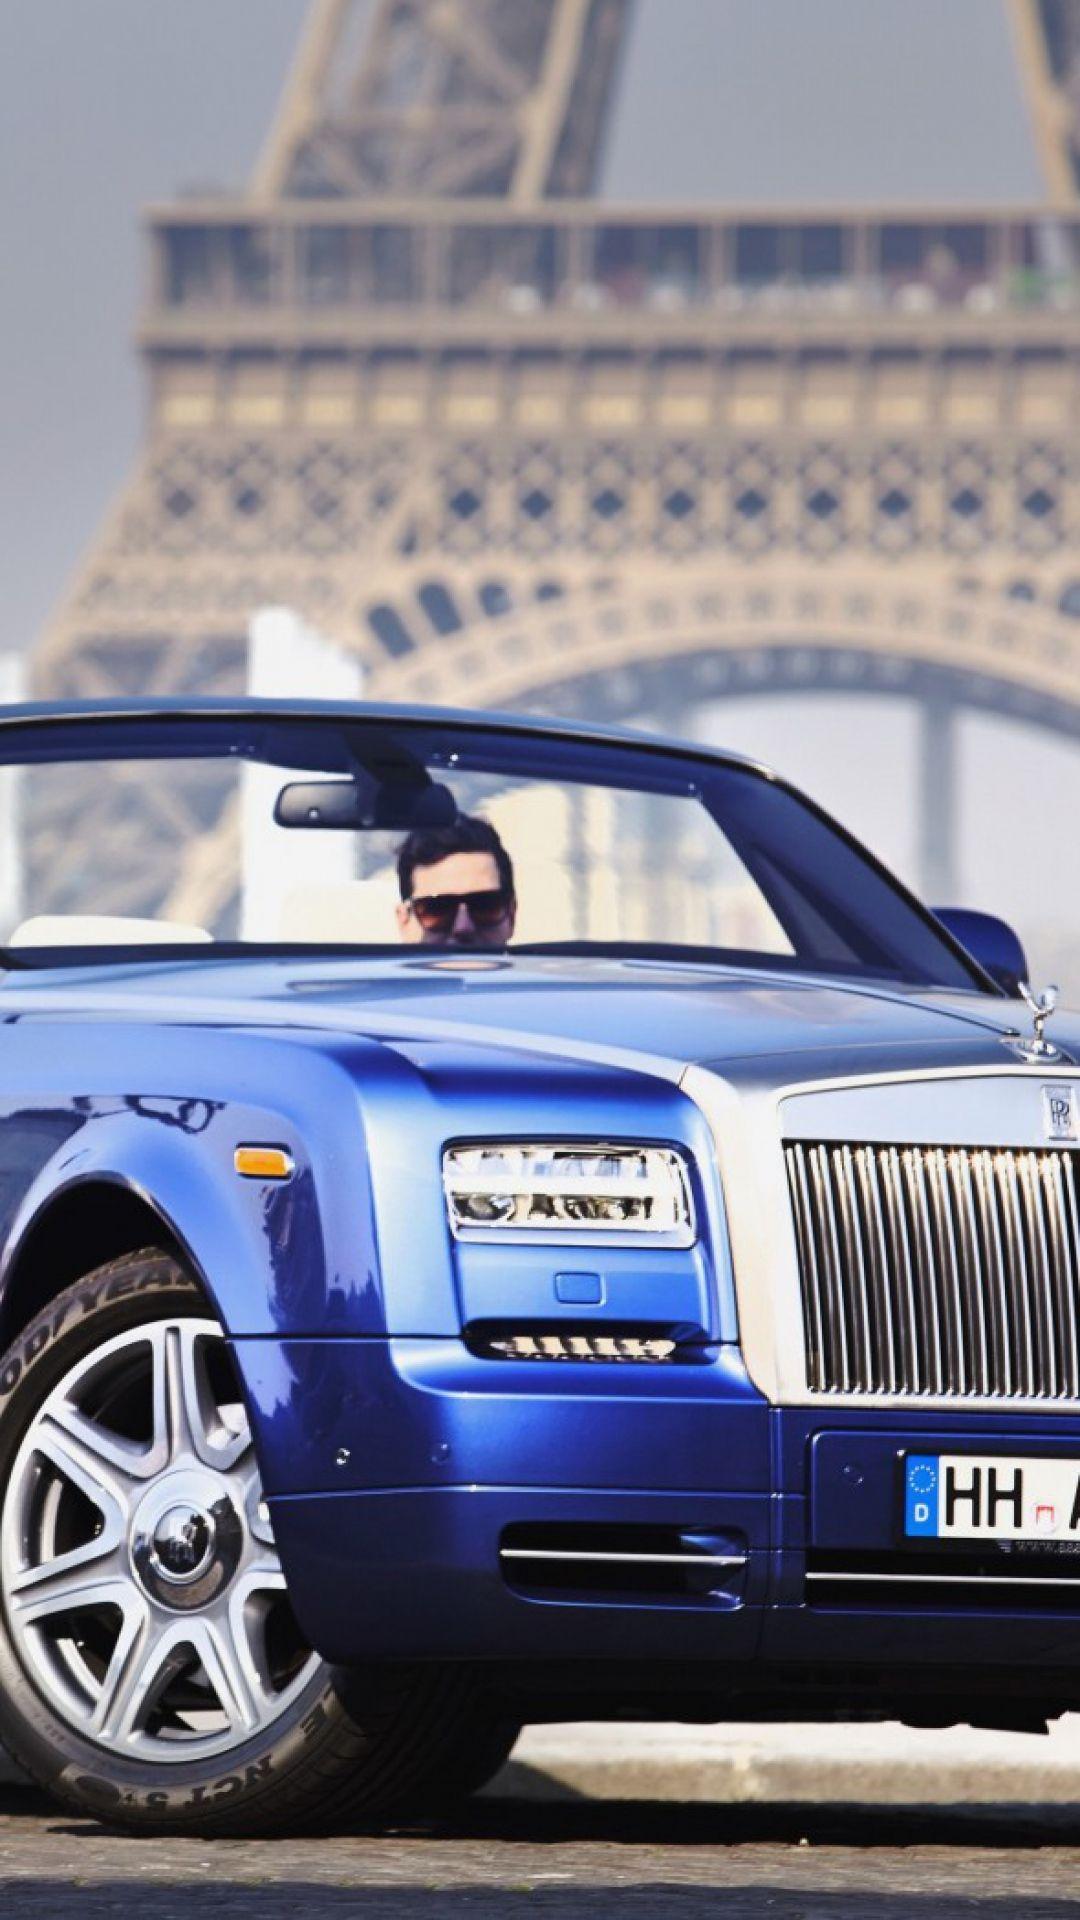 HD Background Rolls Royce Phantom Convertible Dark Blue Front Side